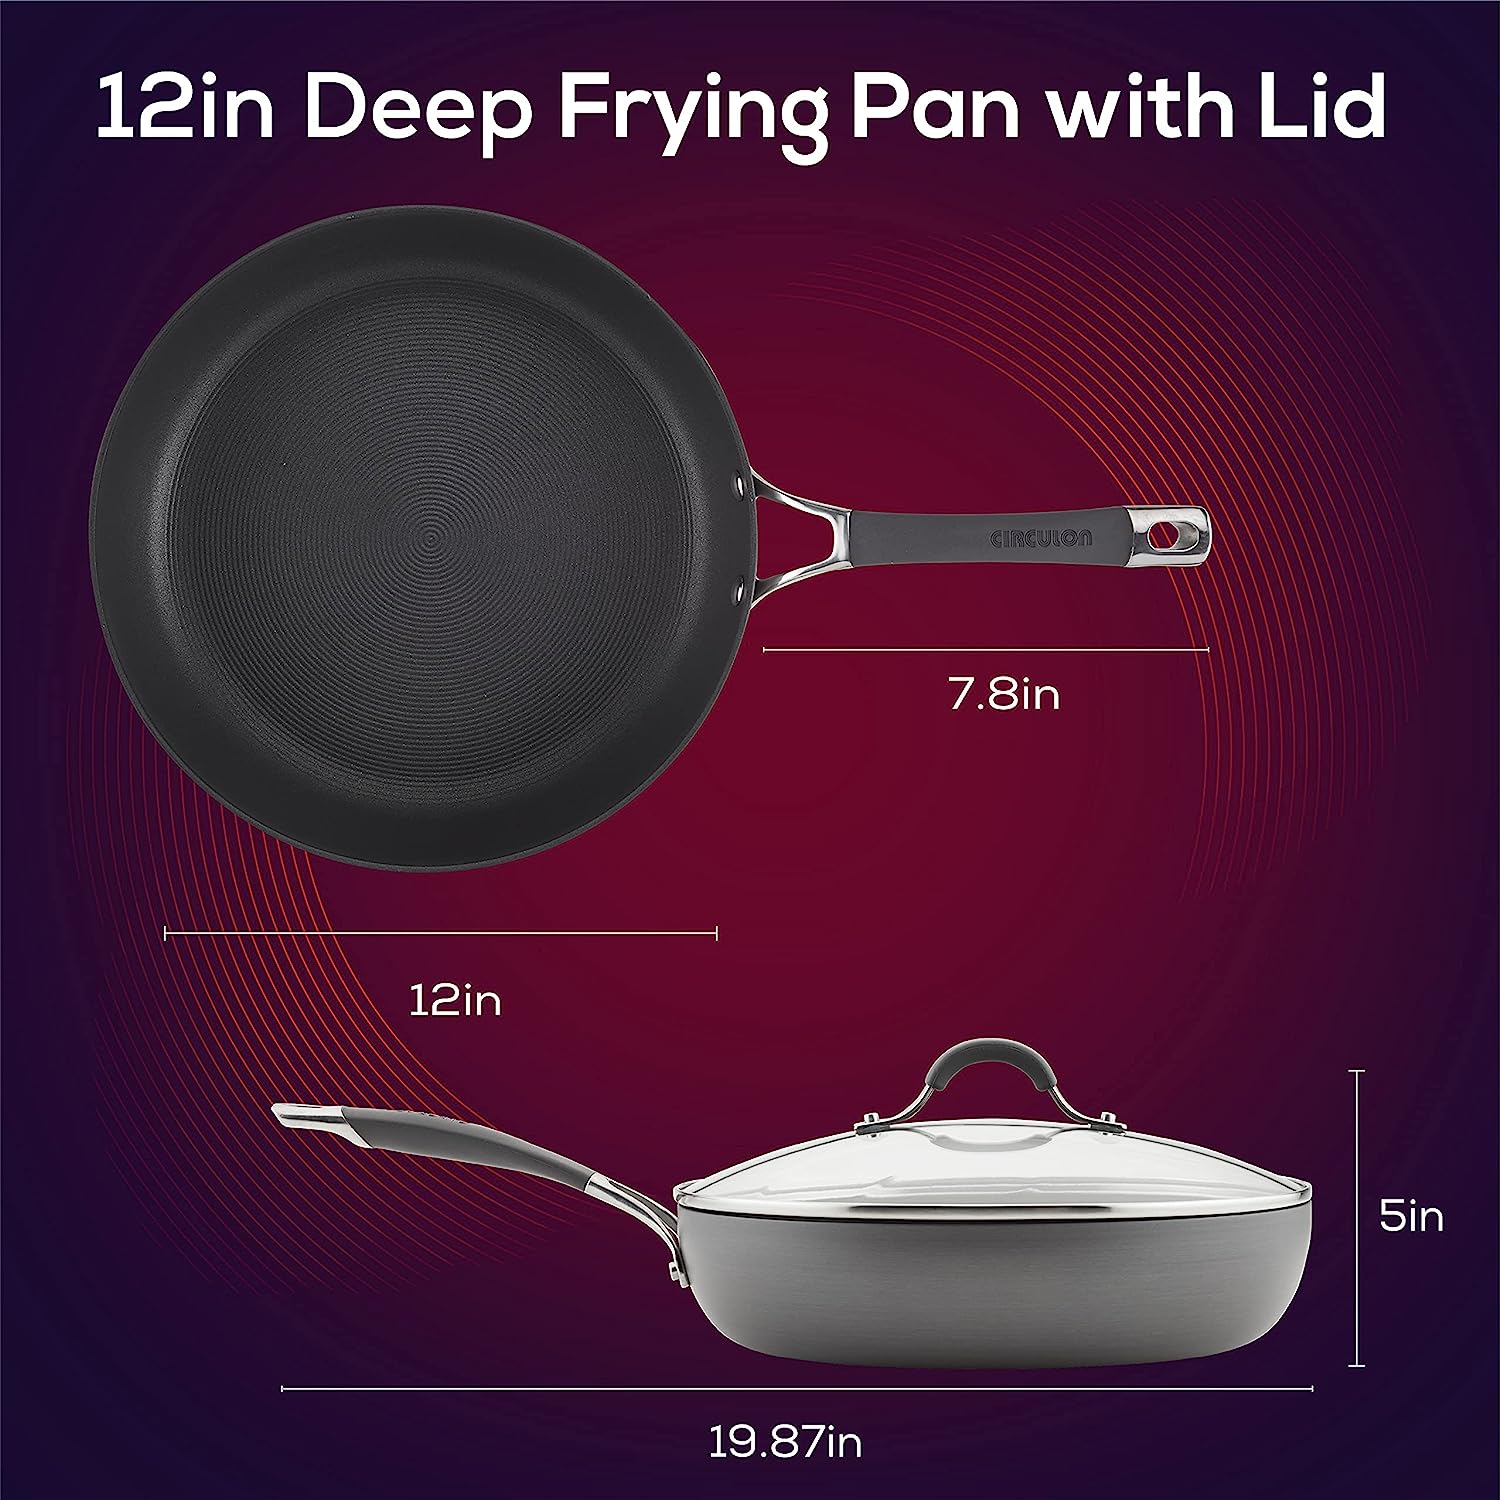 circulon 12 inch fry pan